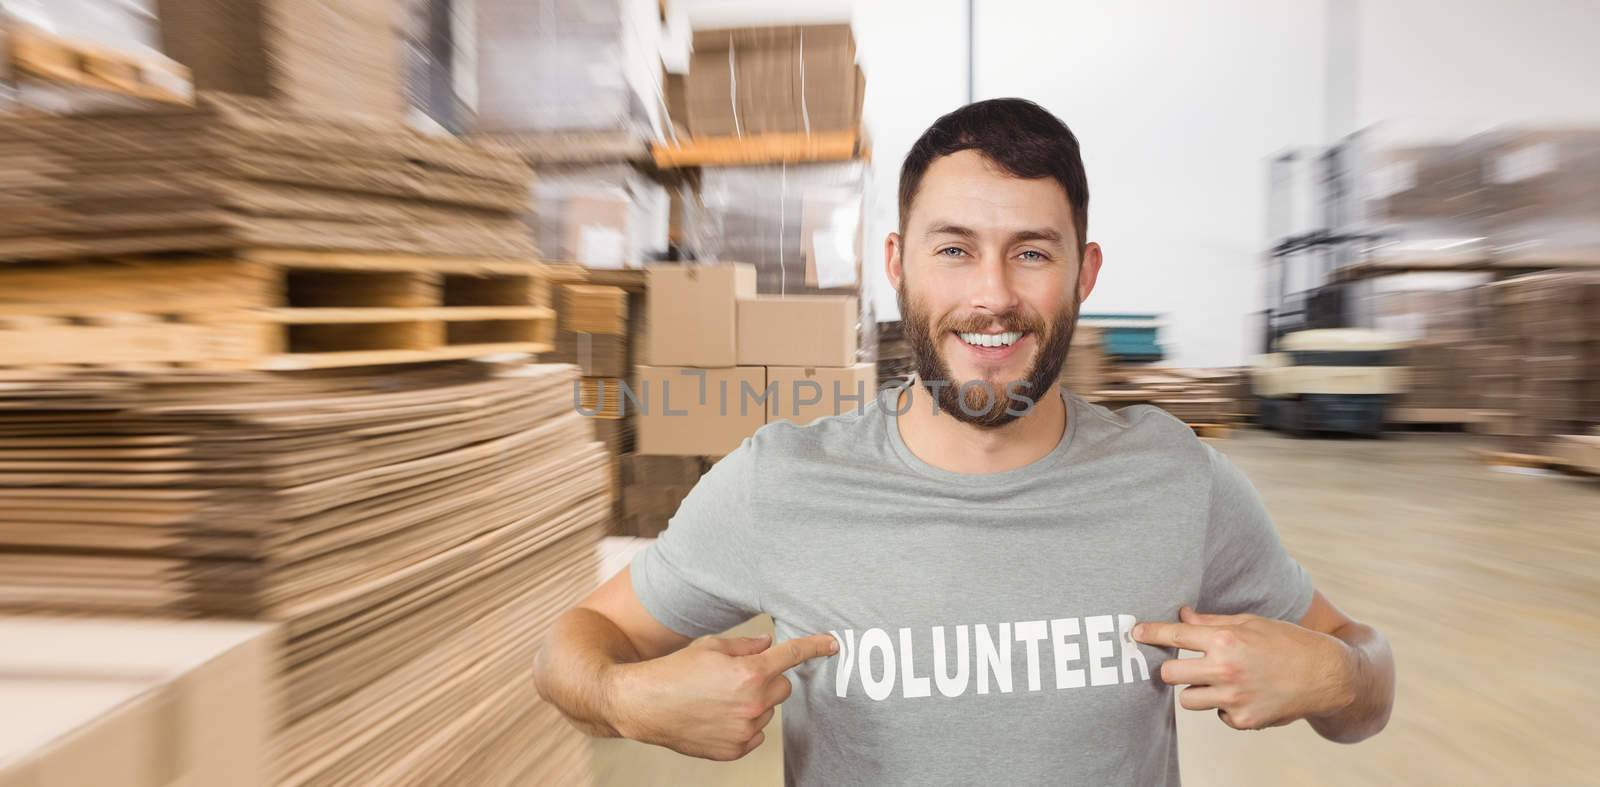 Composite image of man showing volunteer text on tshirt  by Wavebreakmedia